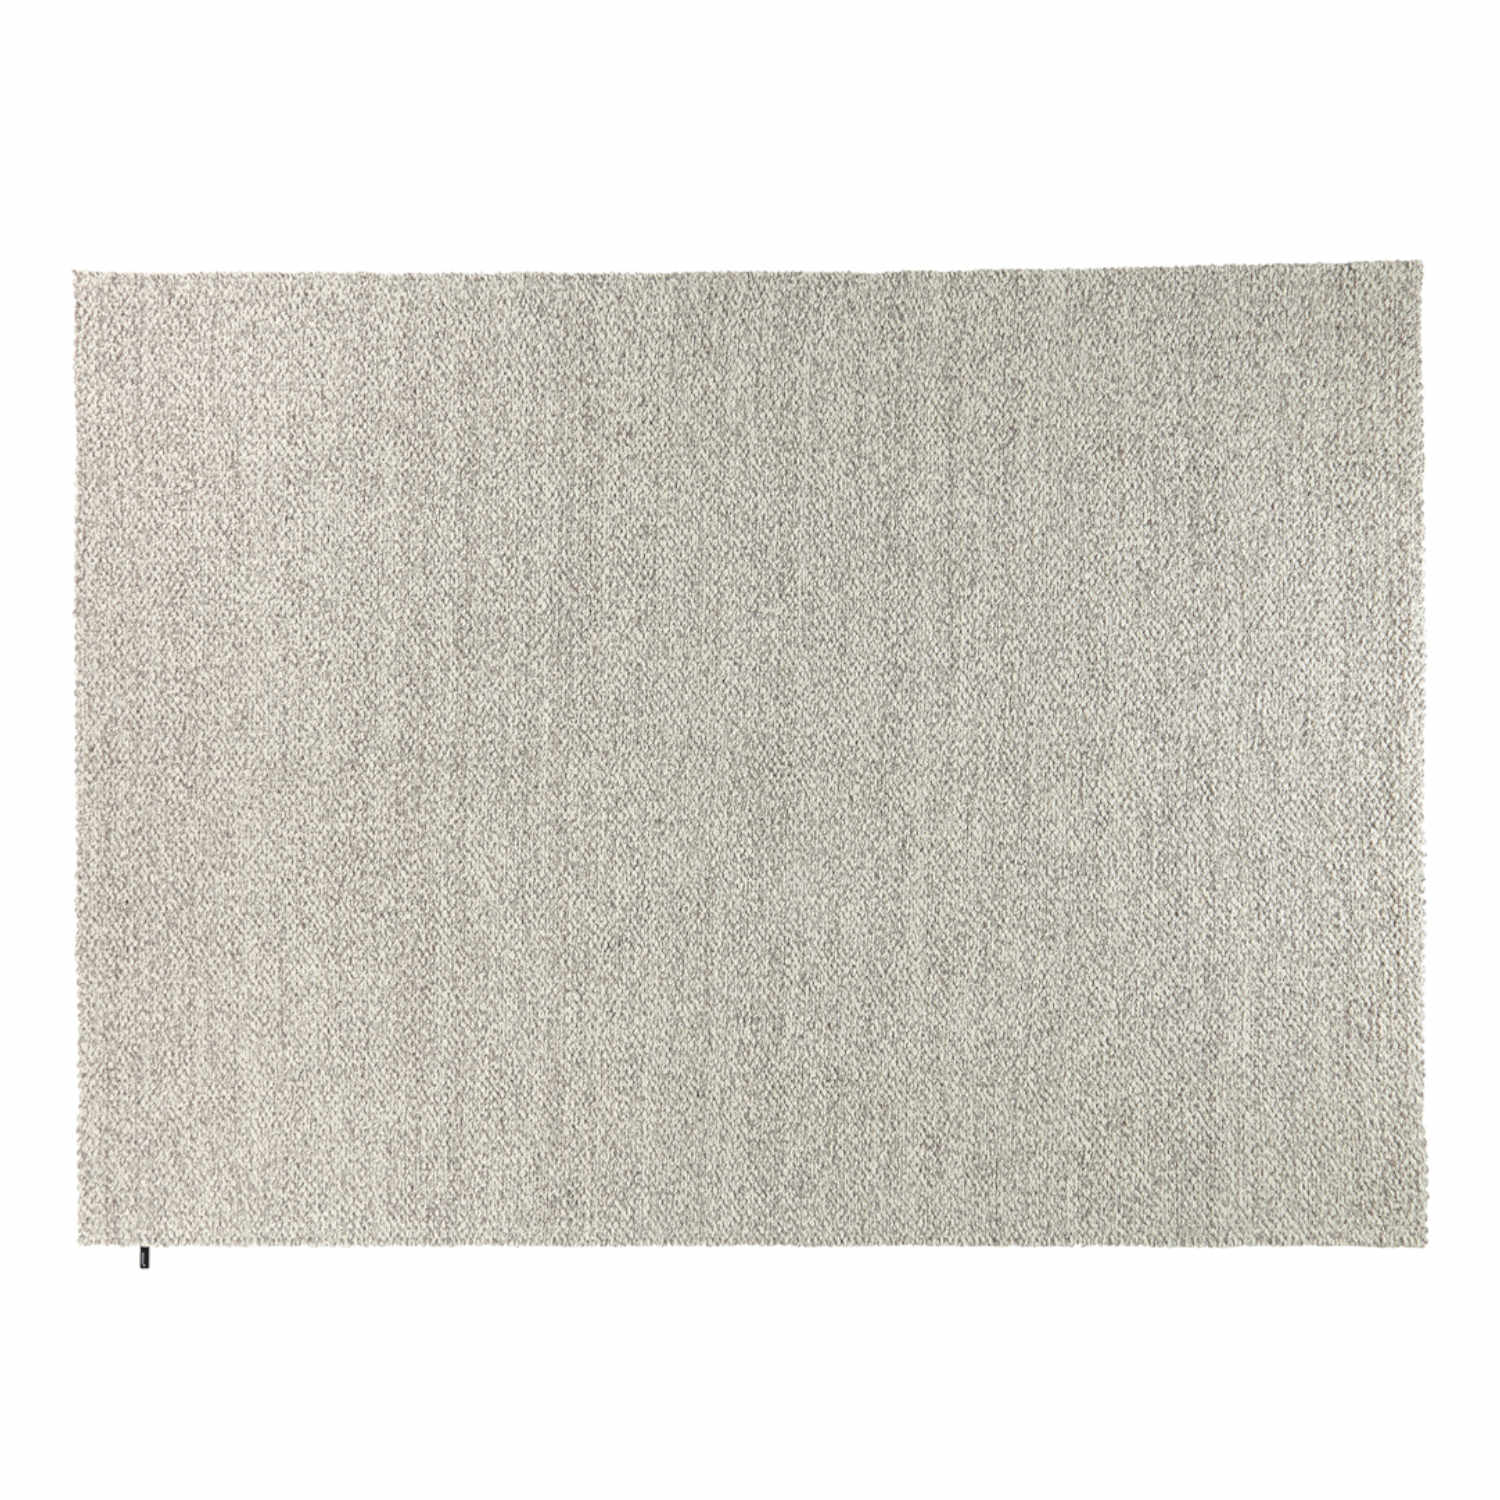 MNU 22 Teppich, Grösse 300 x 400 cm, Farbe ivory von miinu